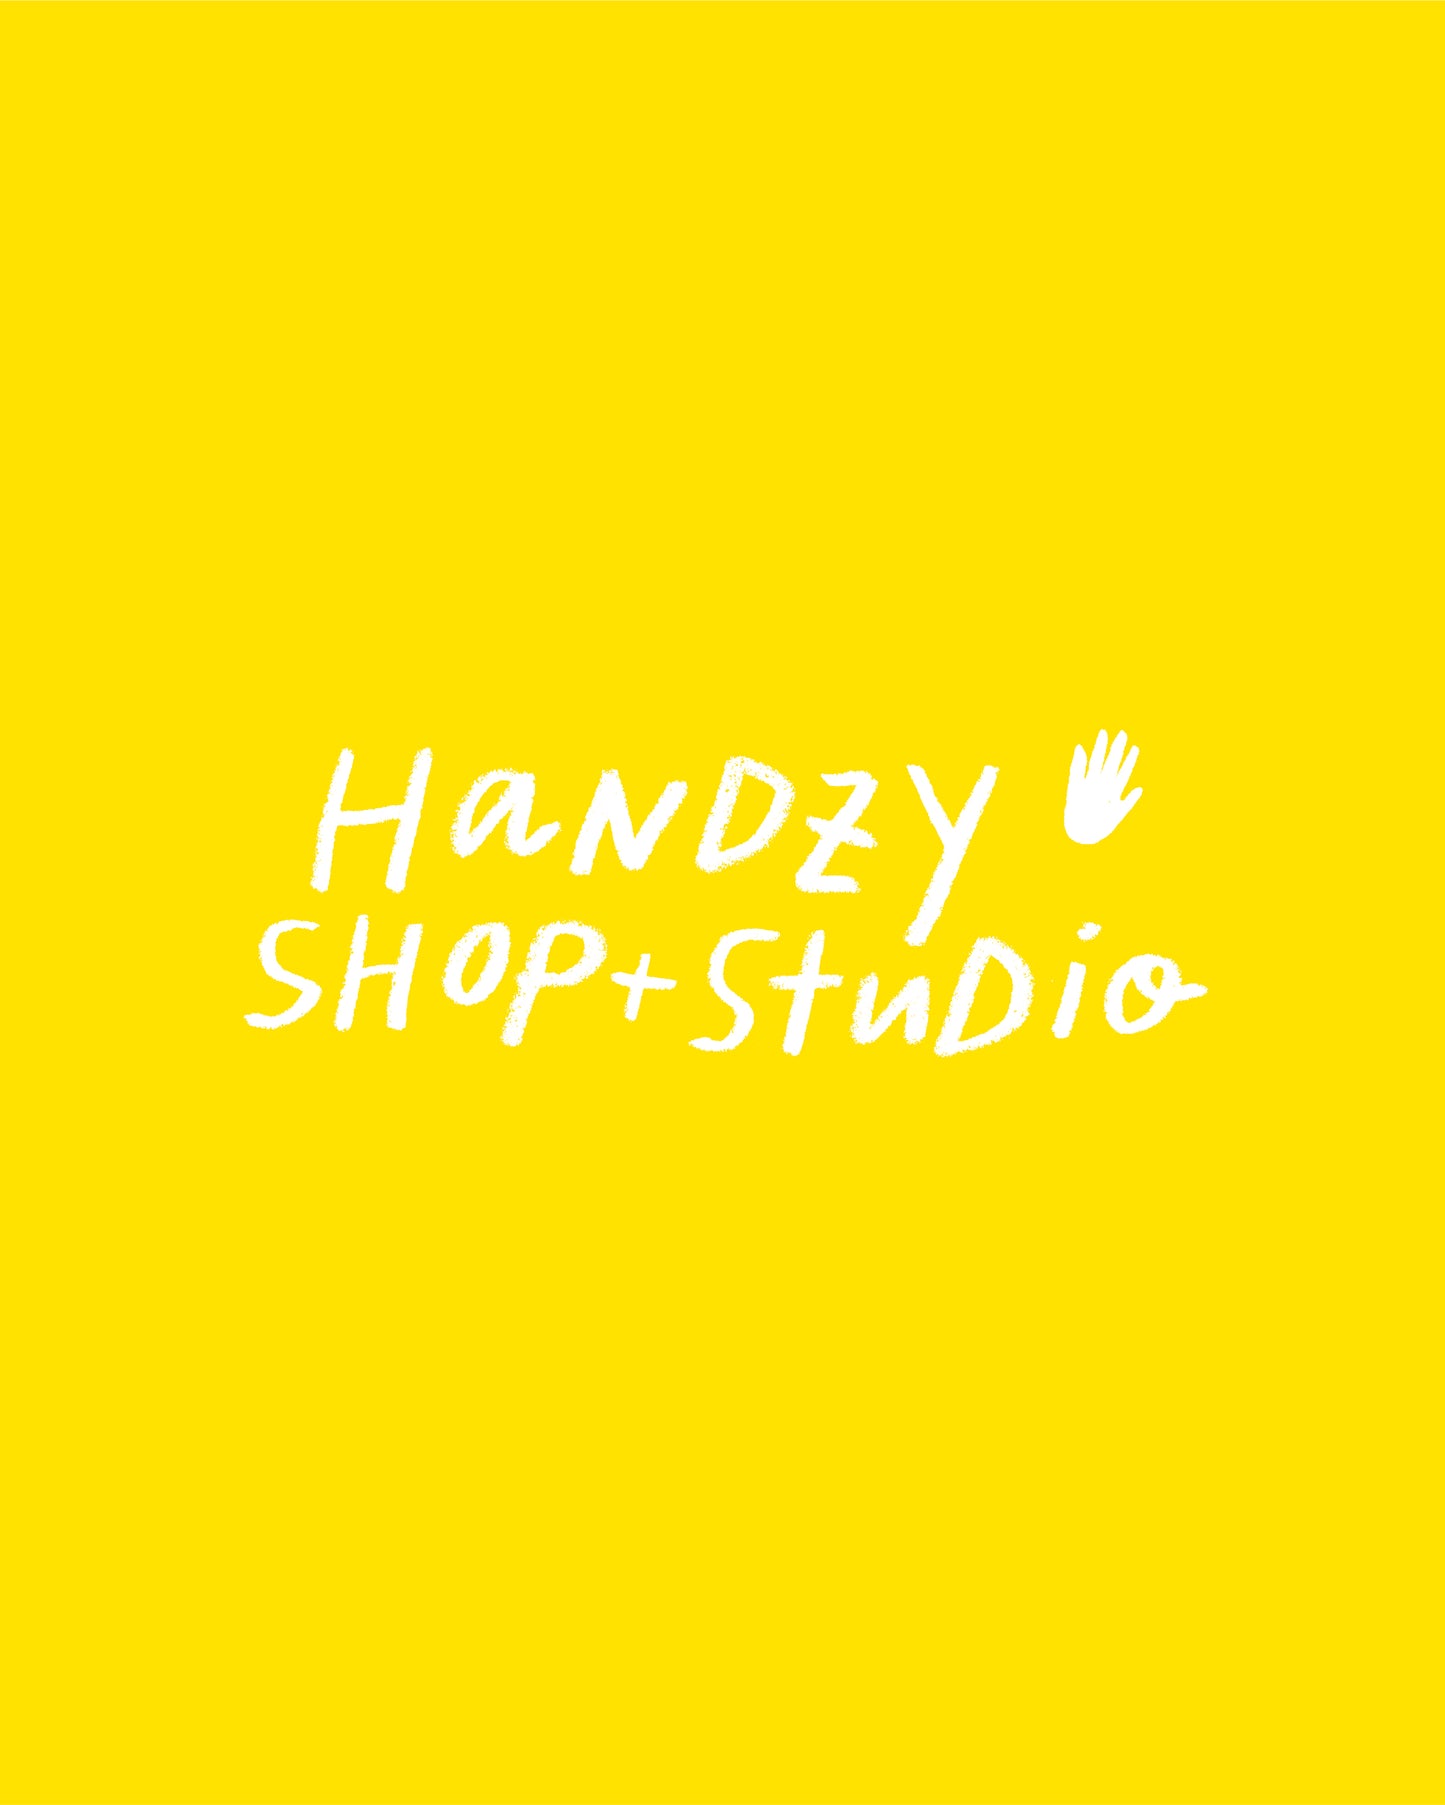 Handzy Shop + Studio Gift Card